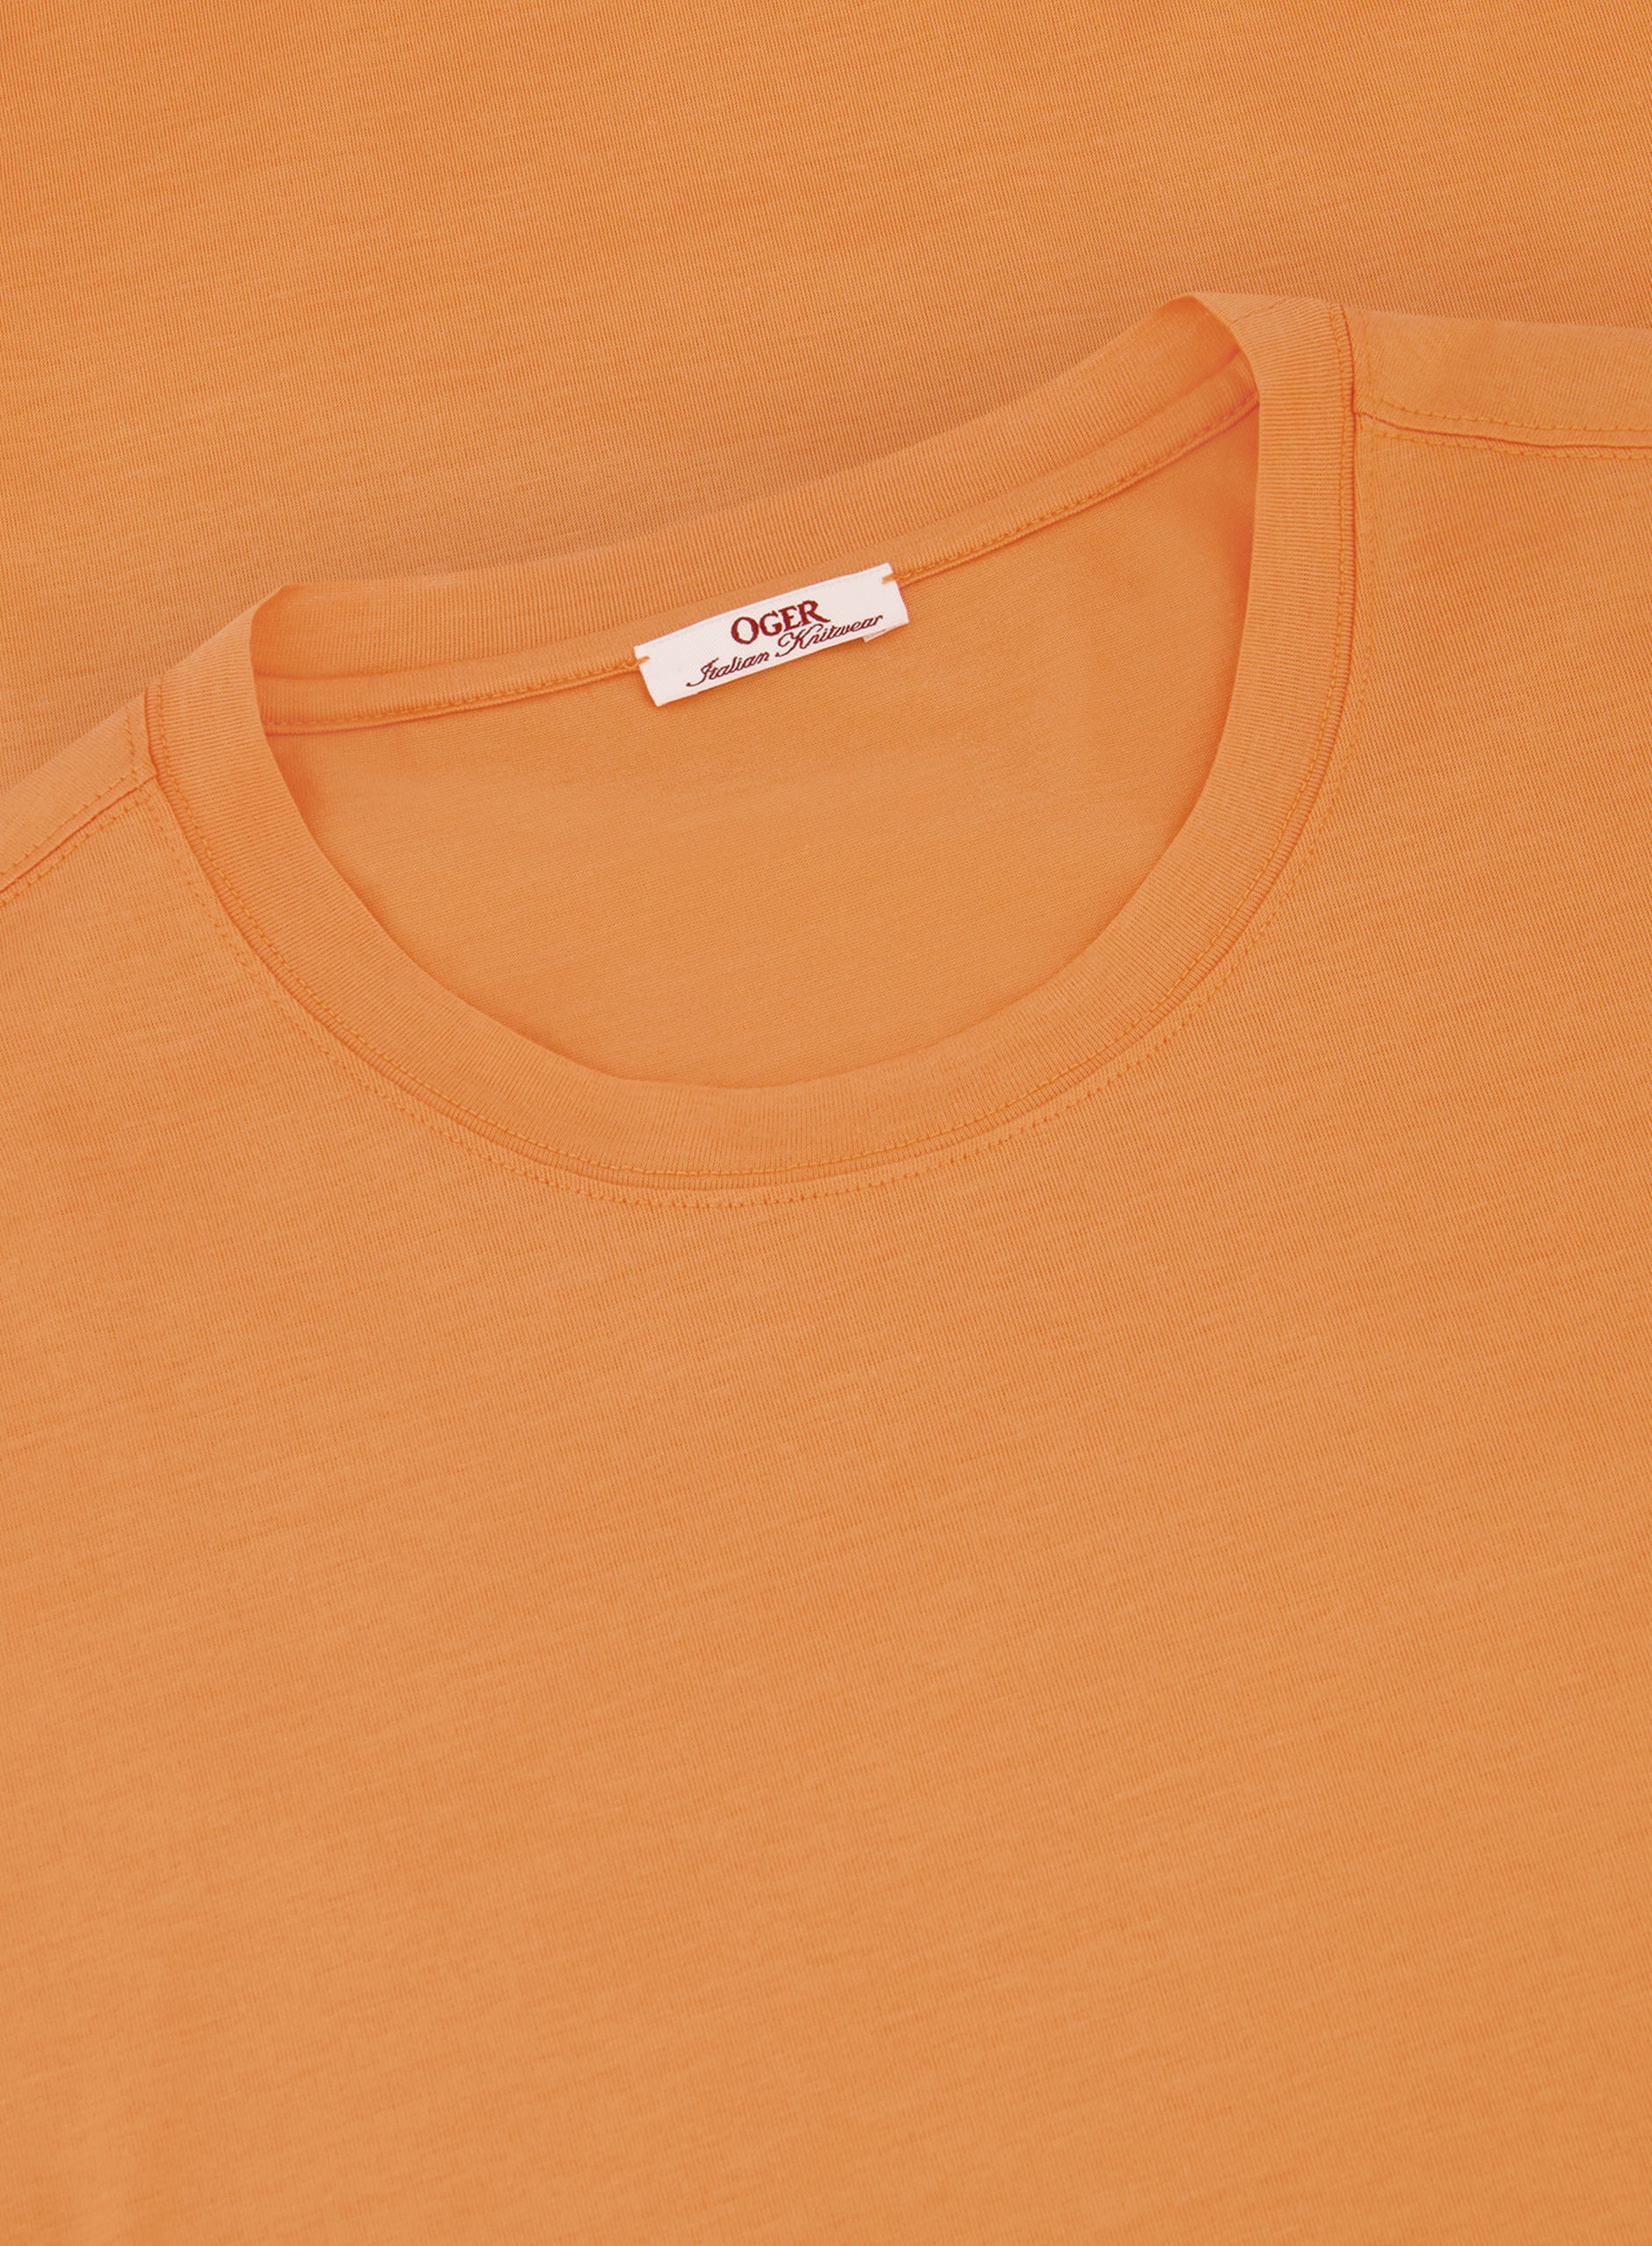 T-shirt van katoen | Oranje